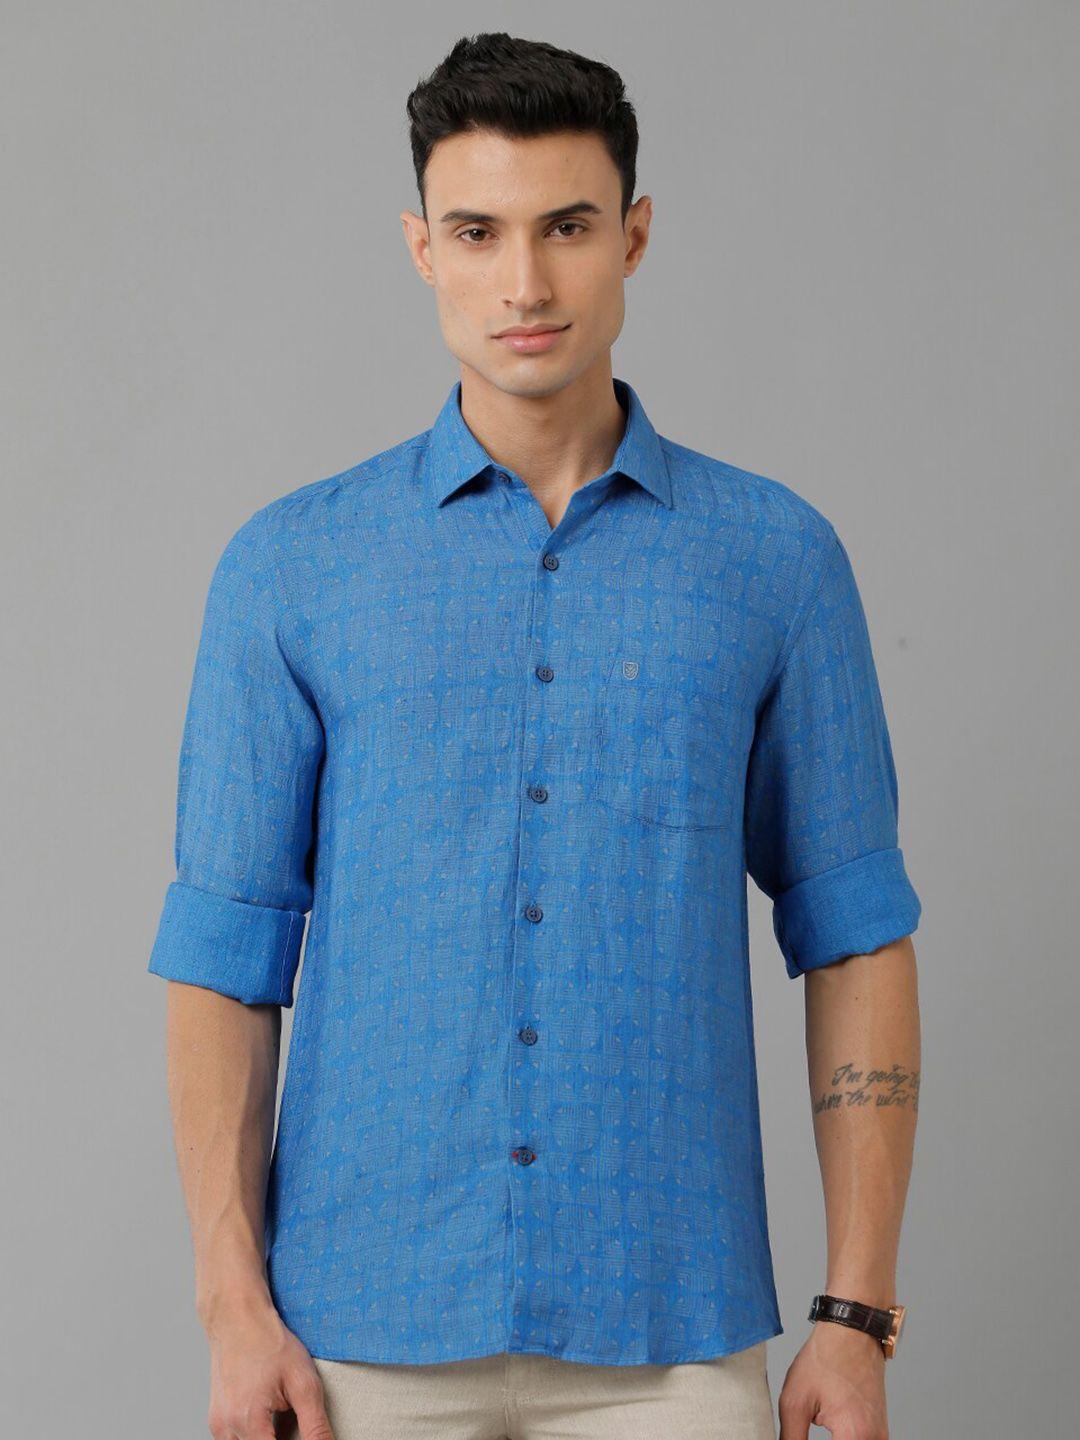 linen-club-geometric-printed-pure-linen-casual-shirt